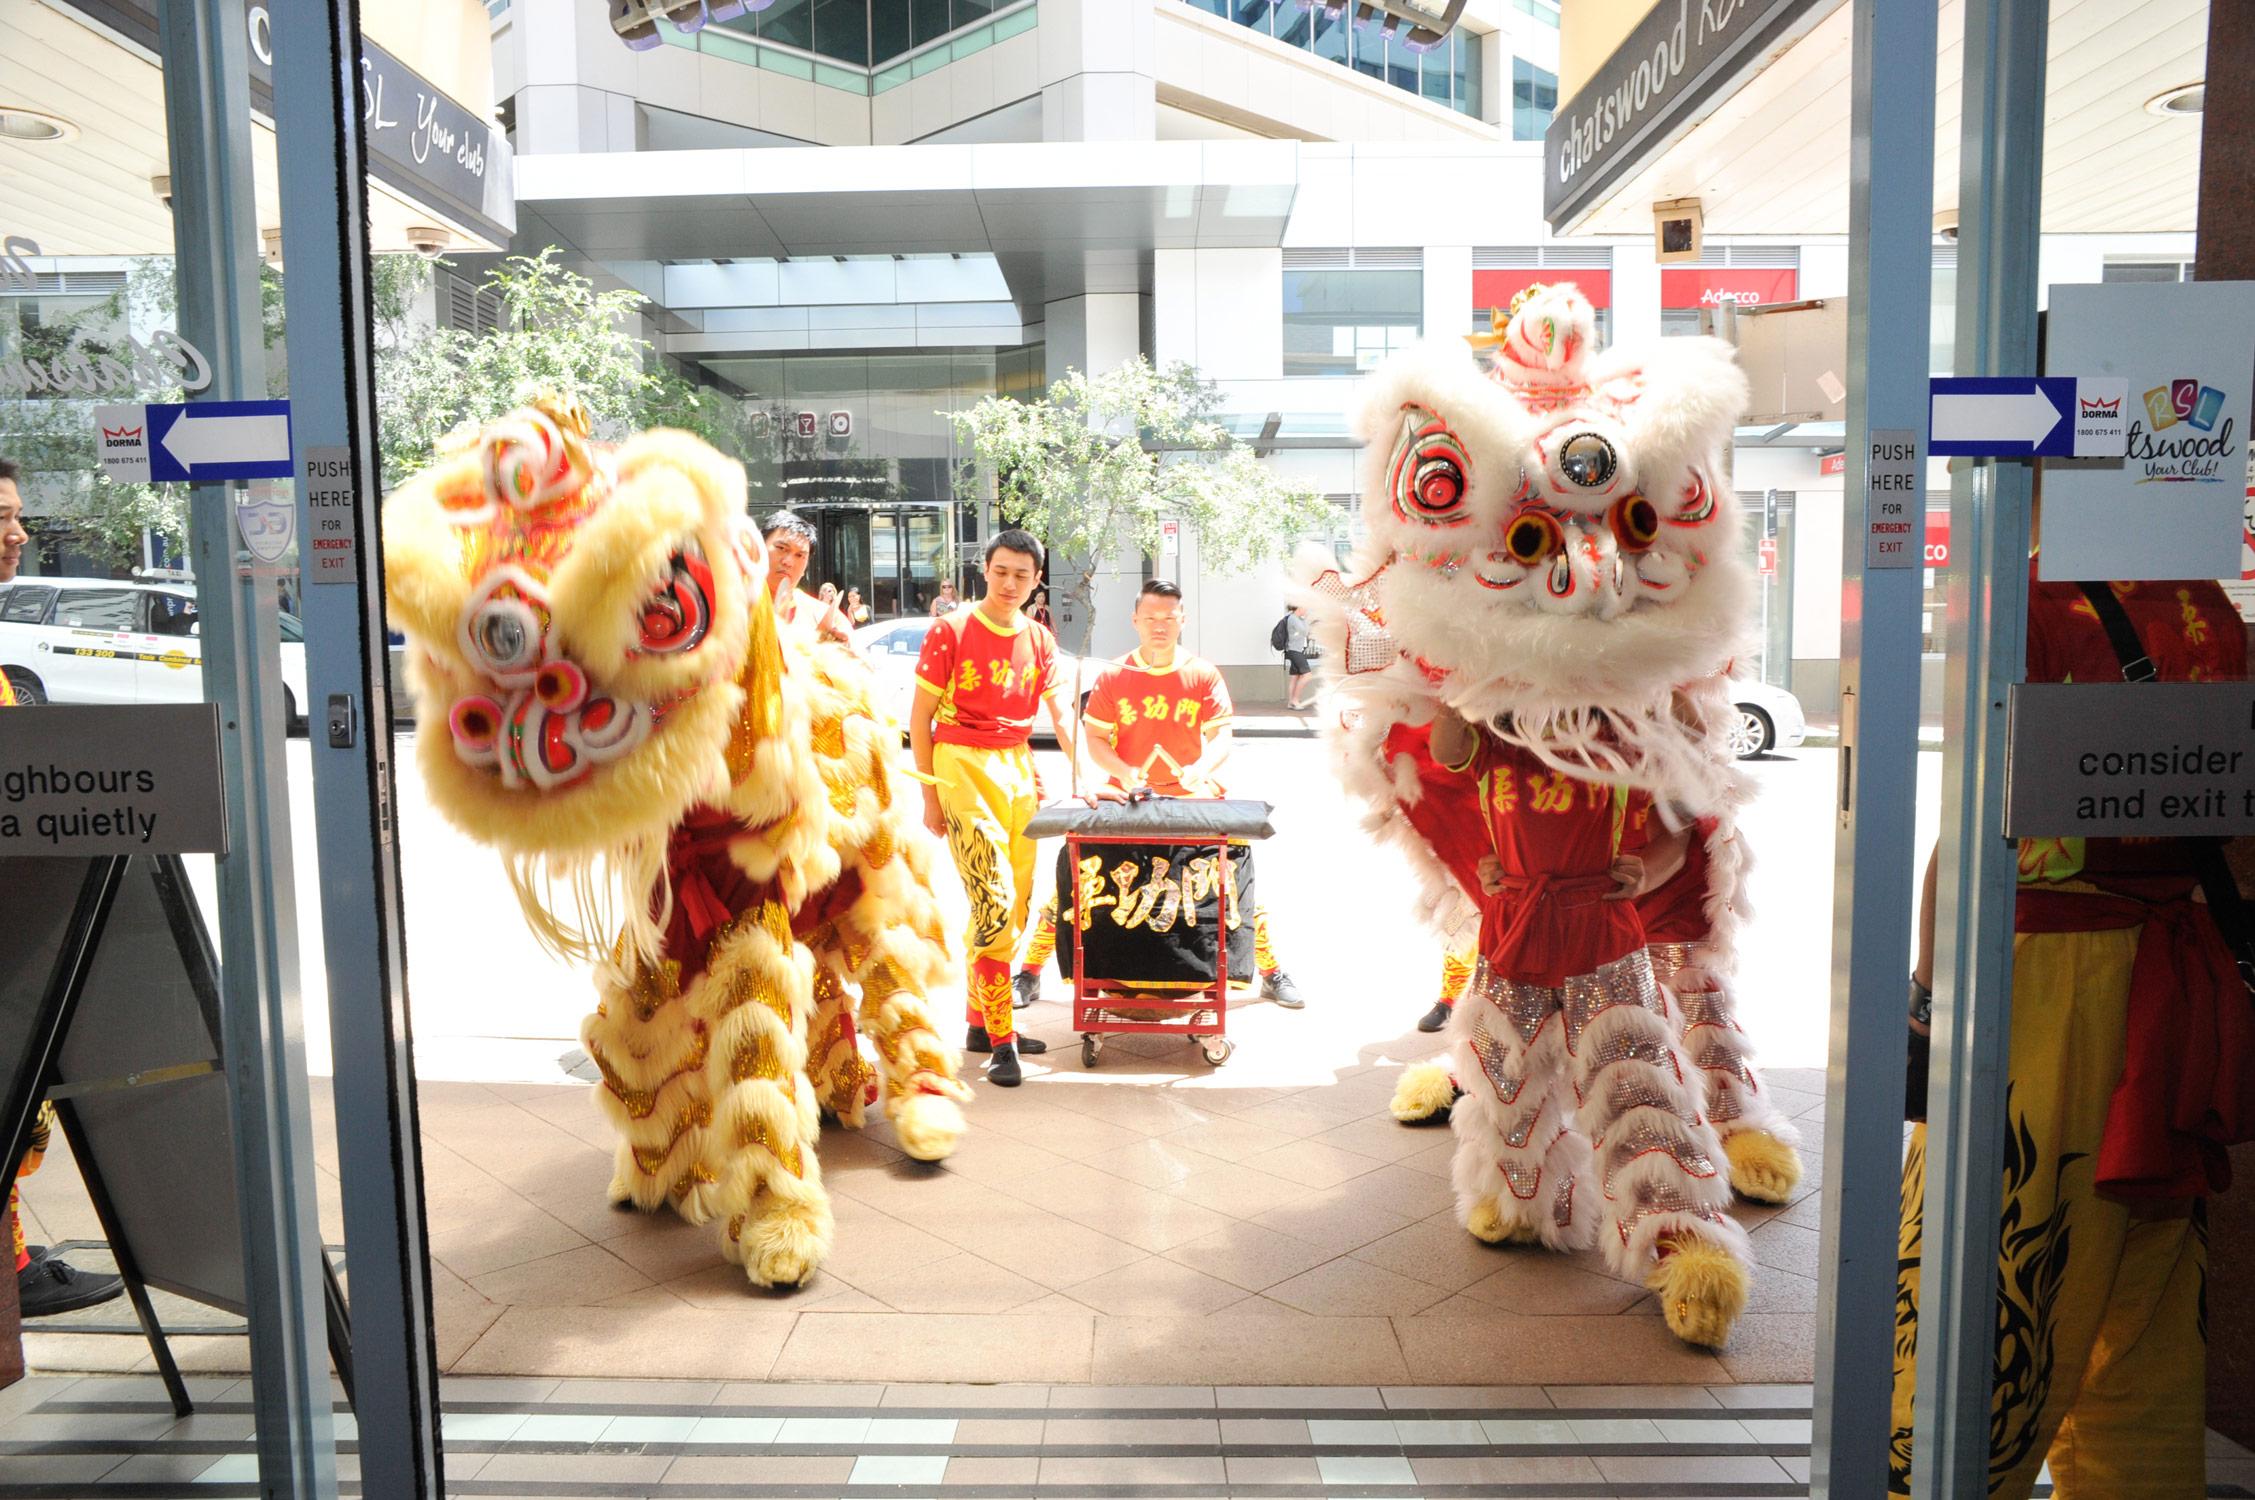 RSL Lion Logo - Chinese New Year Lion Dancers - Chatswood RSL